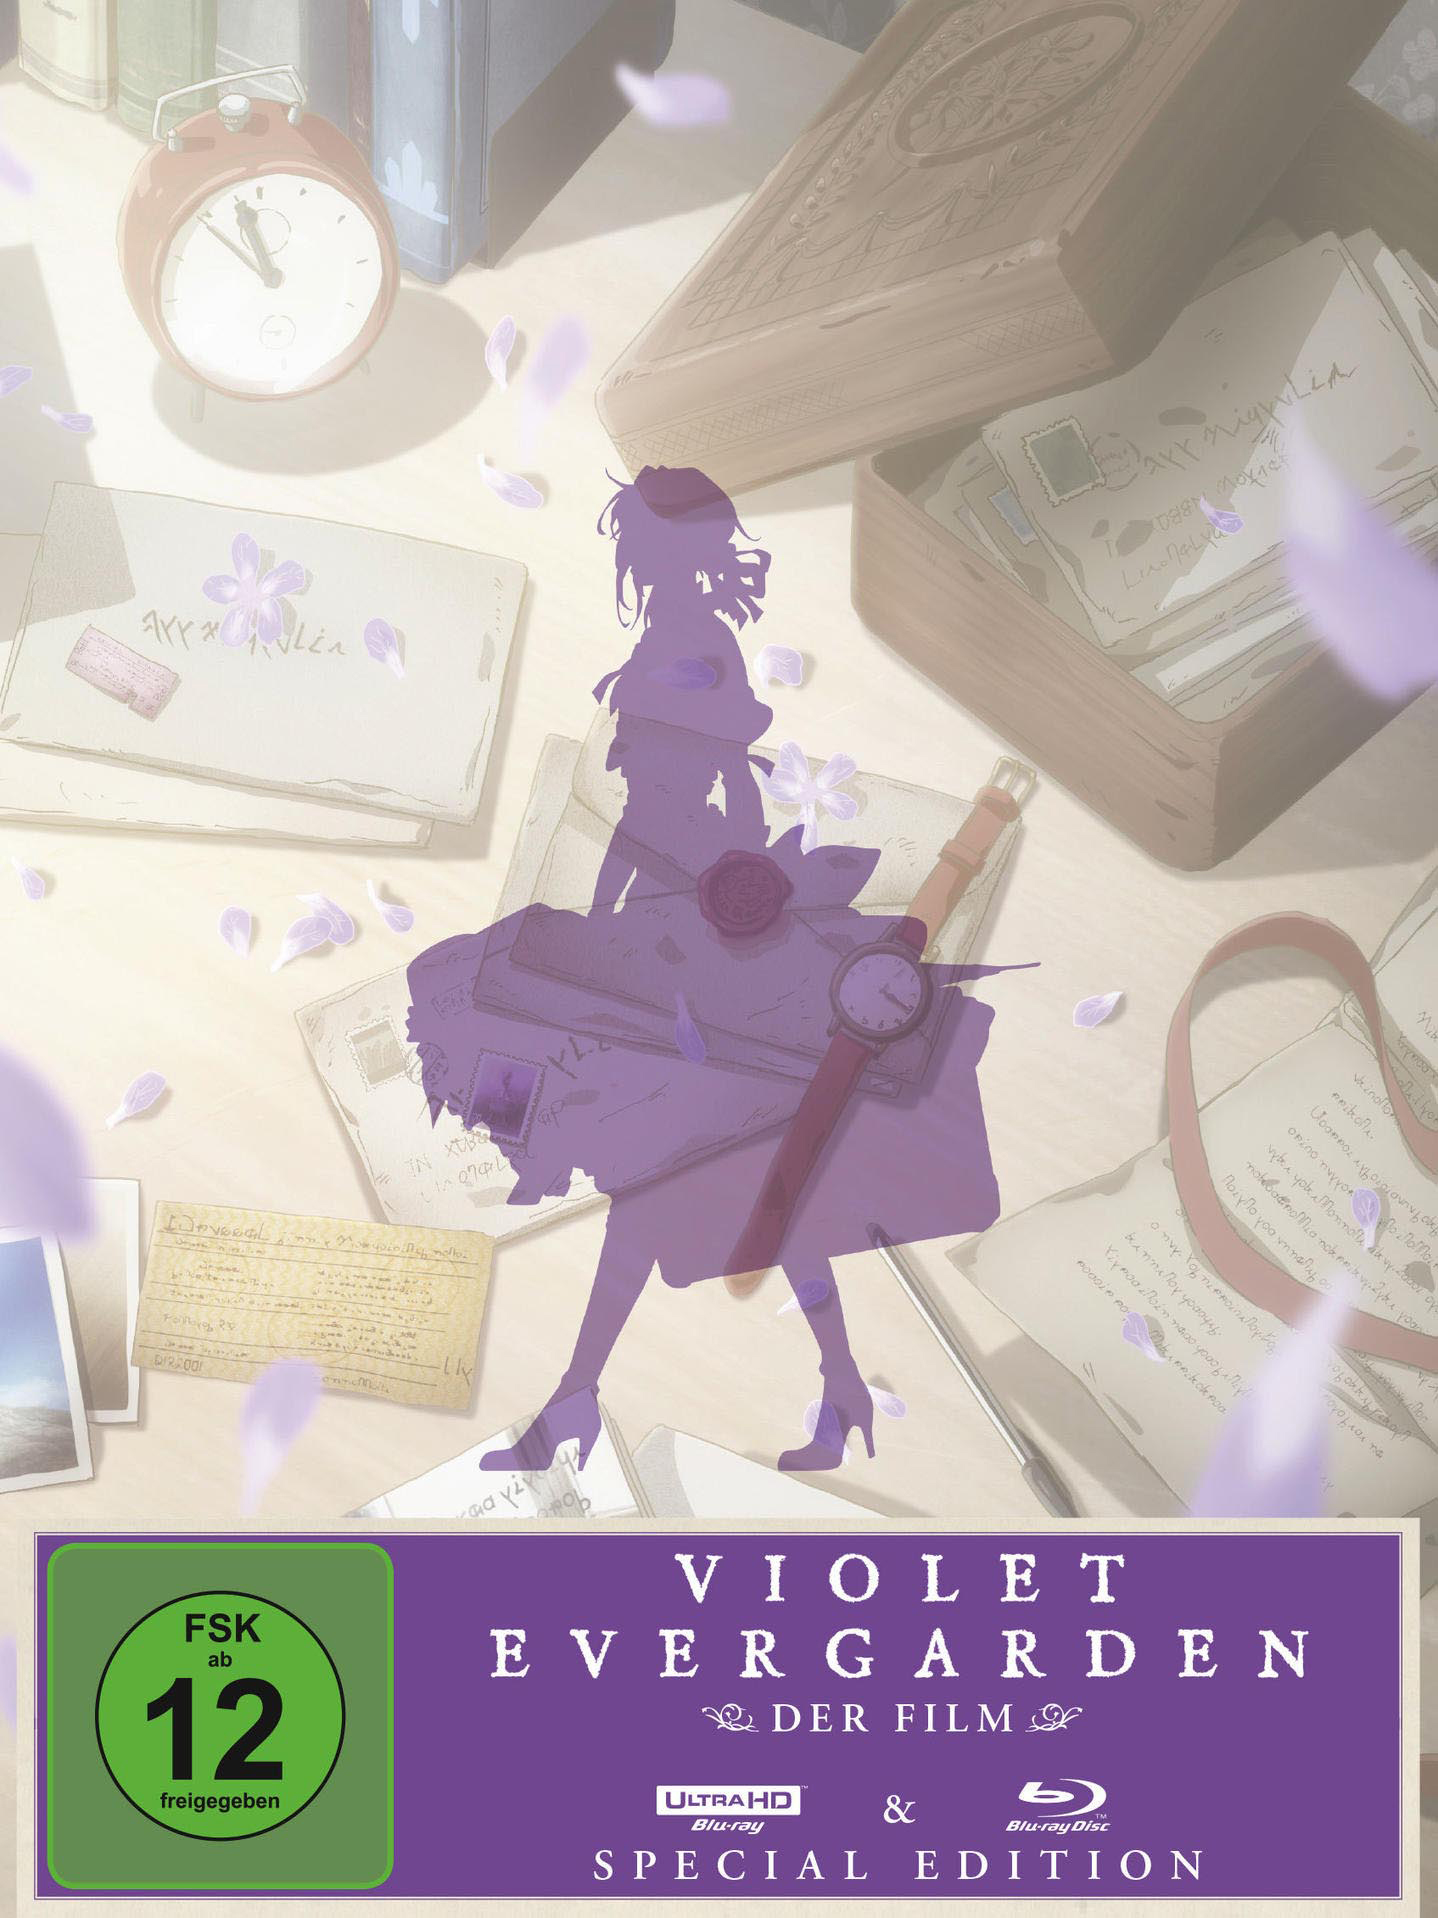 HD Evergarden: Violet Der + Blu-ray Blu-ray Ultra Film 4K